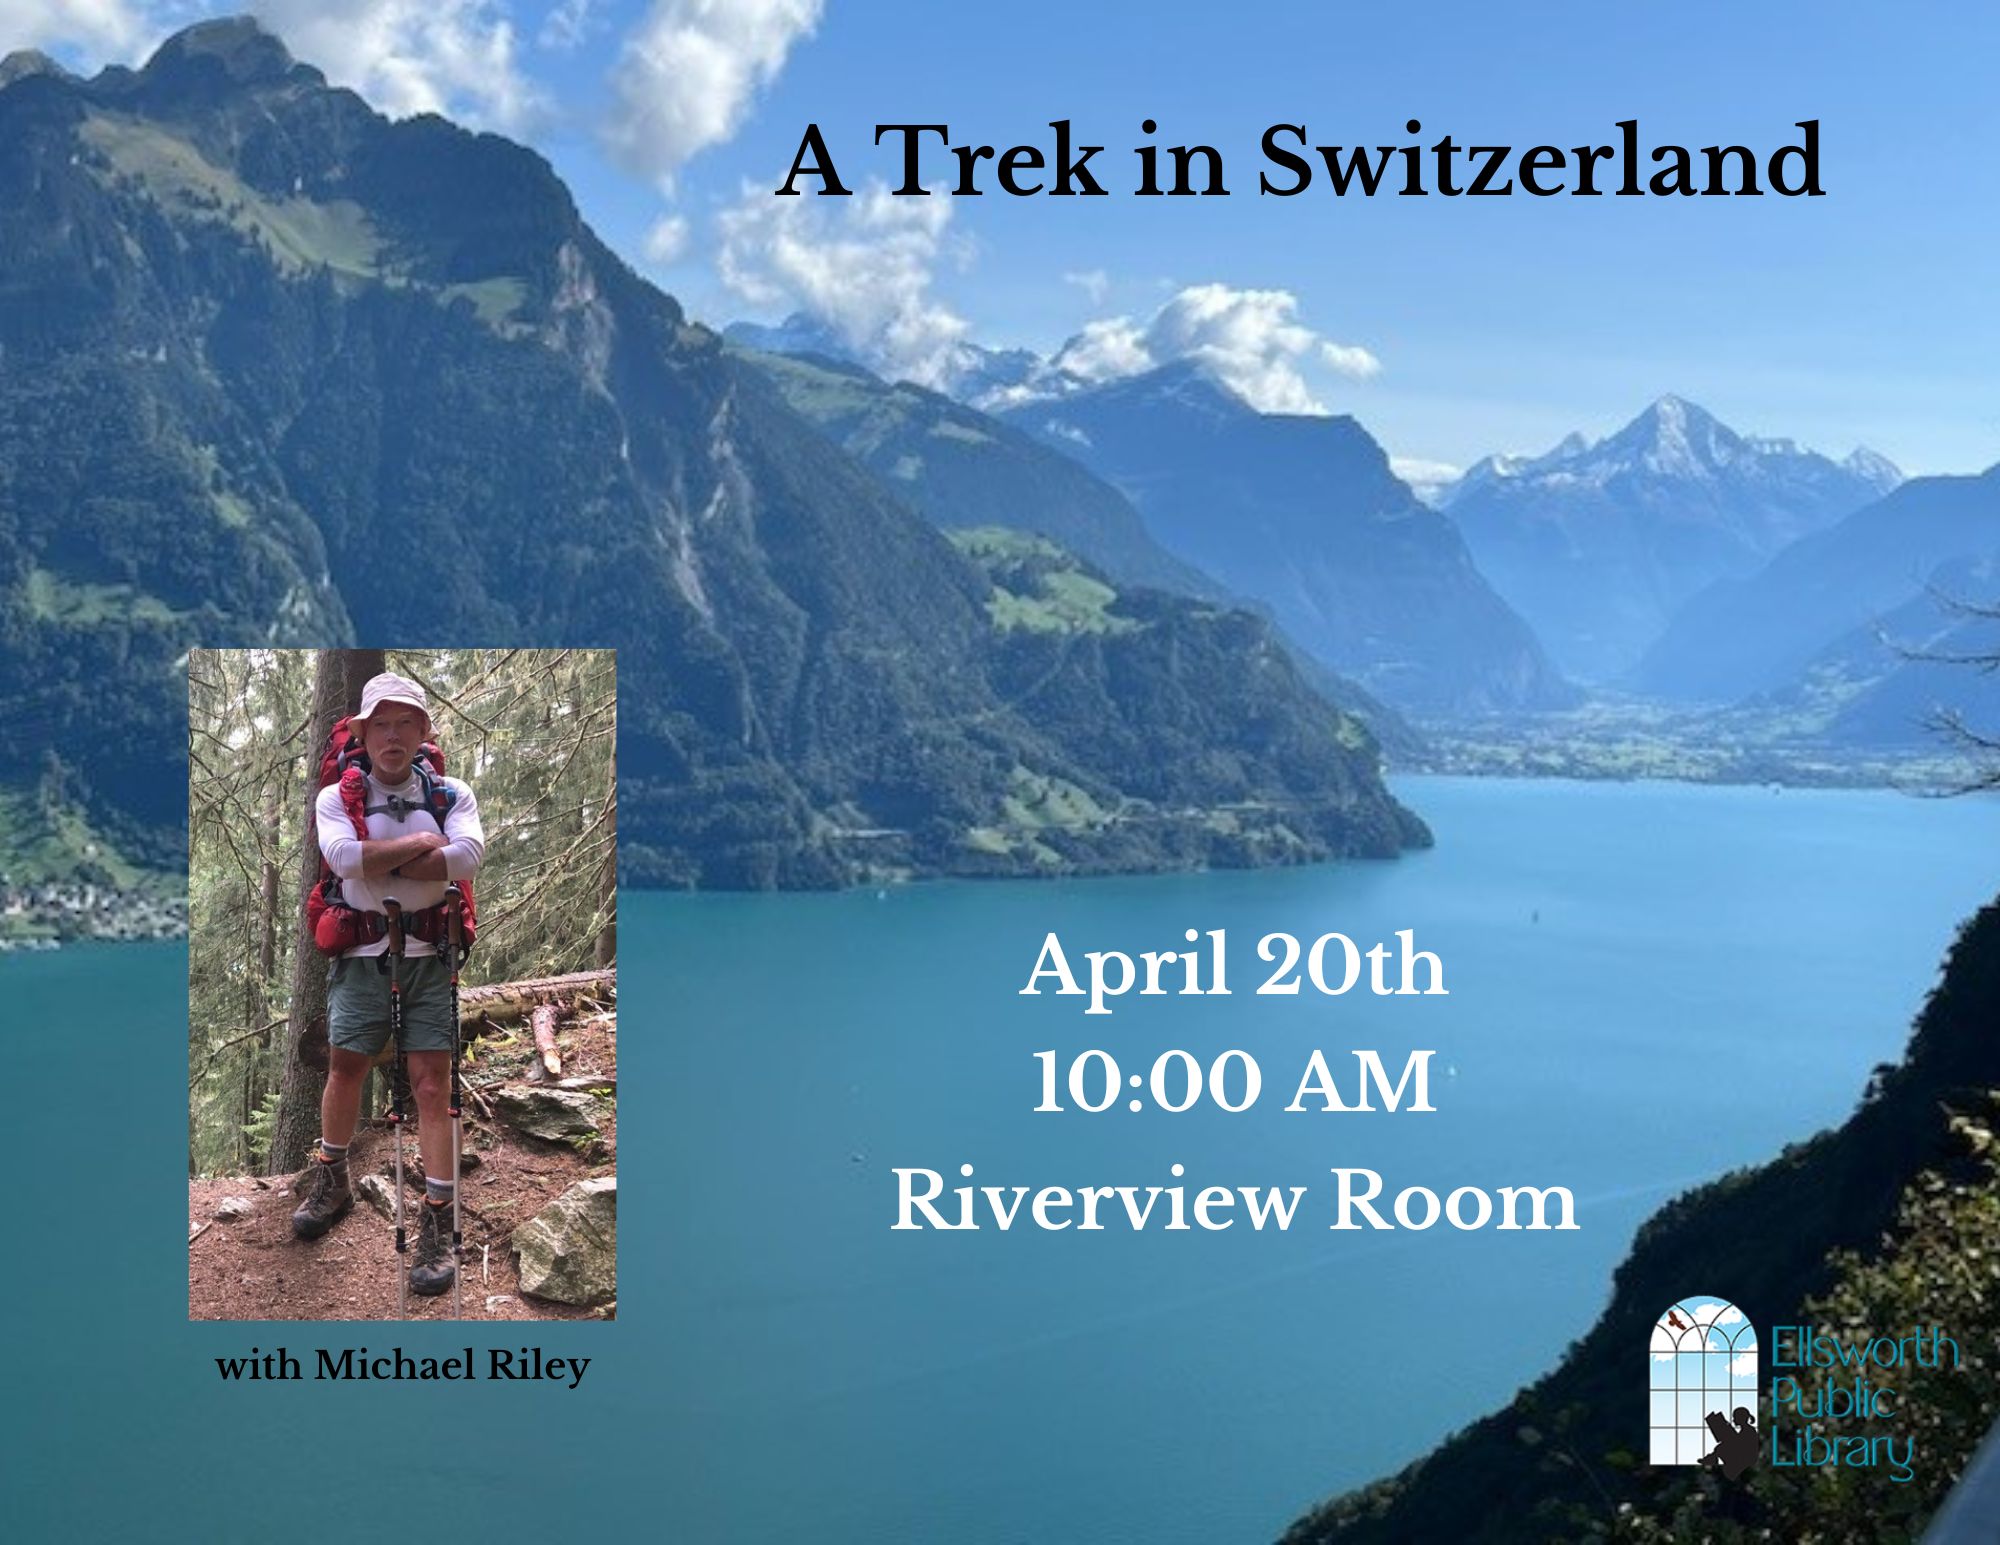 A Trek in Switzerland with Michael Riley